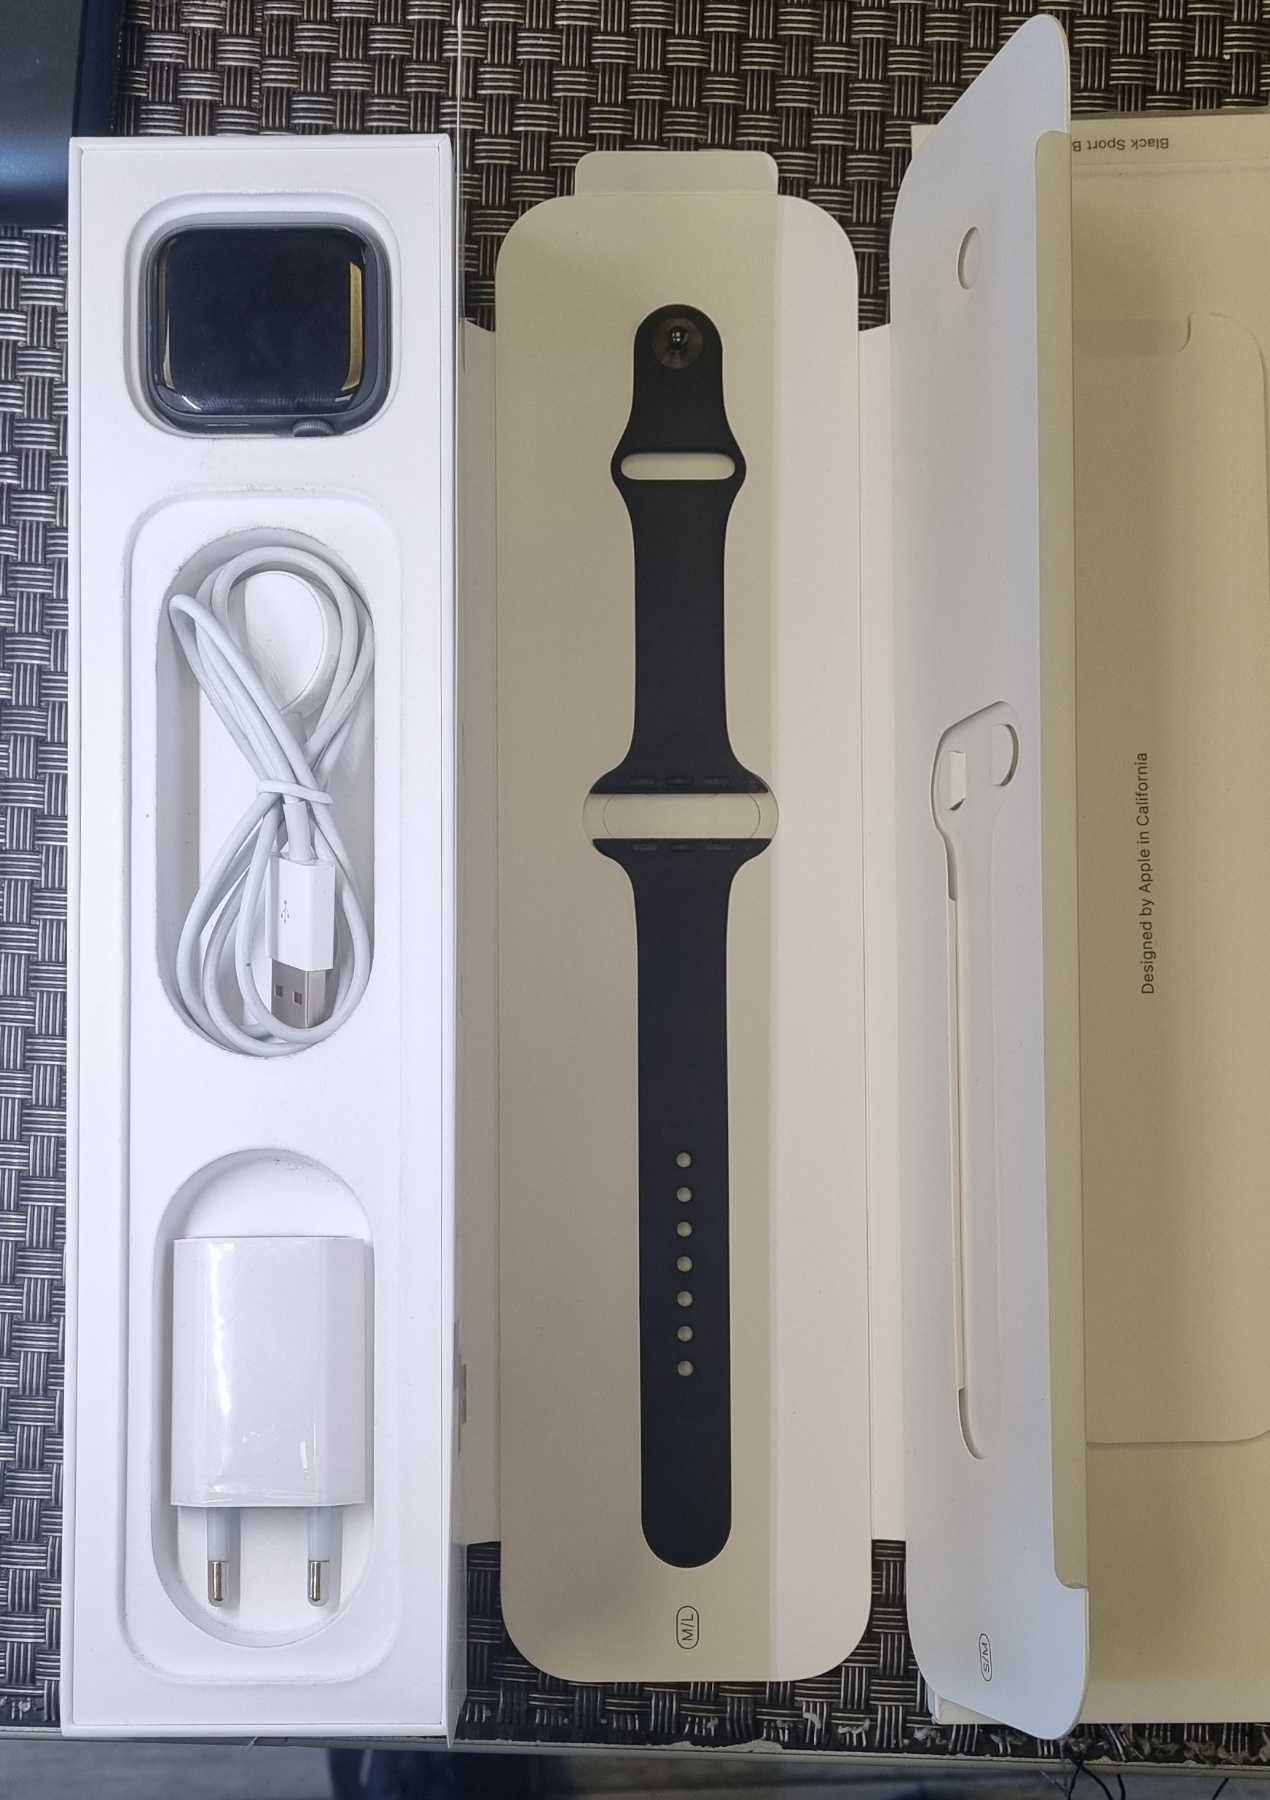 Apple watch 5 44мм. в гаранция